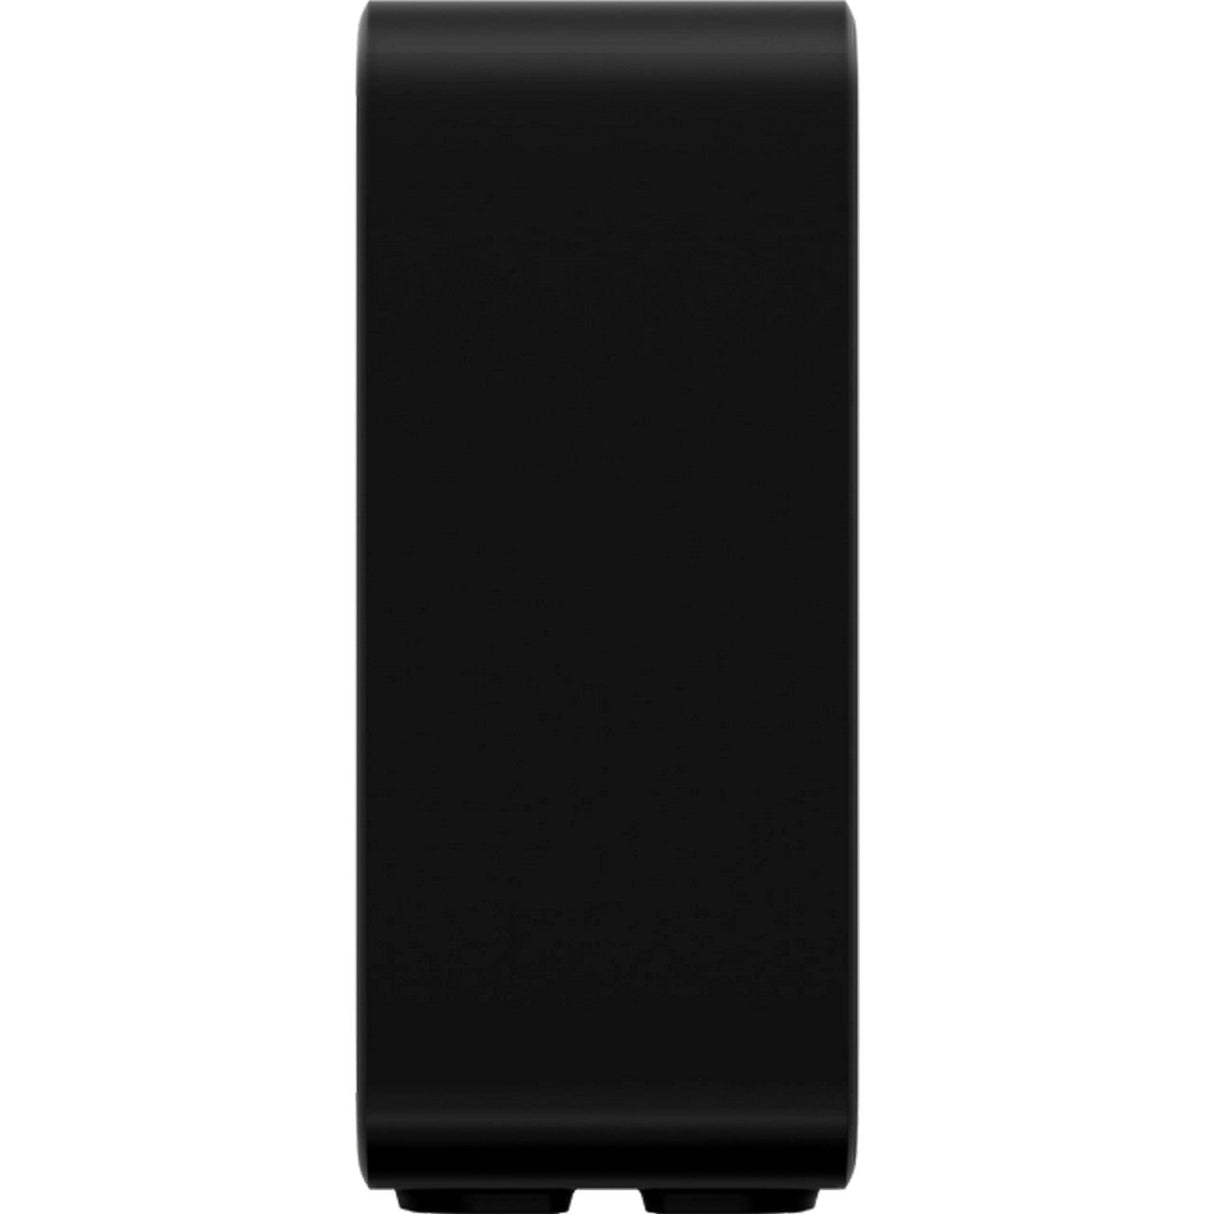 Sonos Gen 3 Wireless Wi-Fi Subwoofer